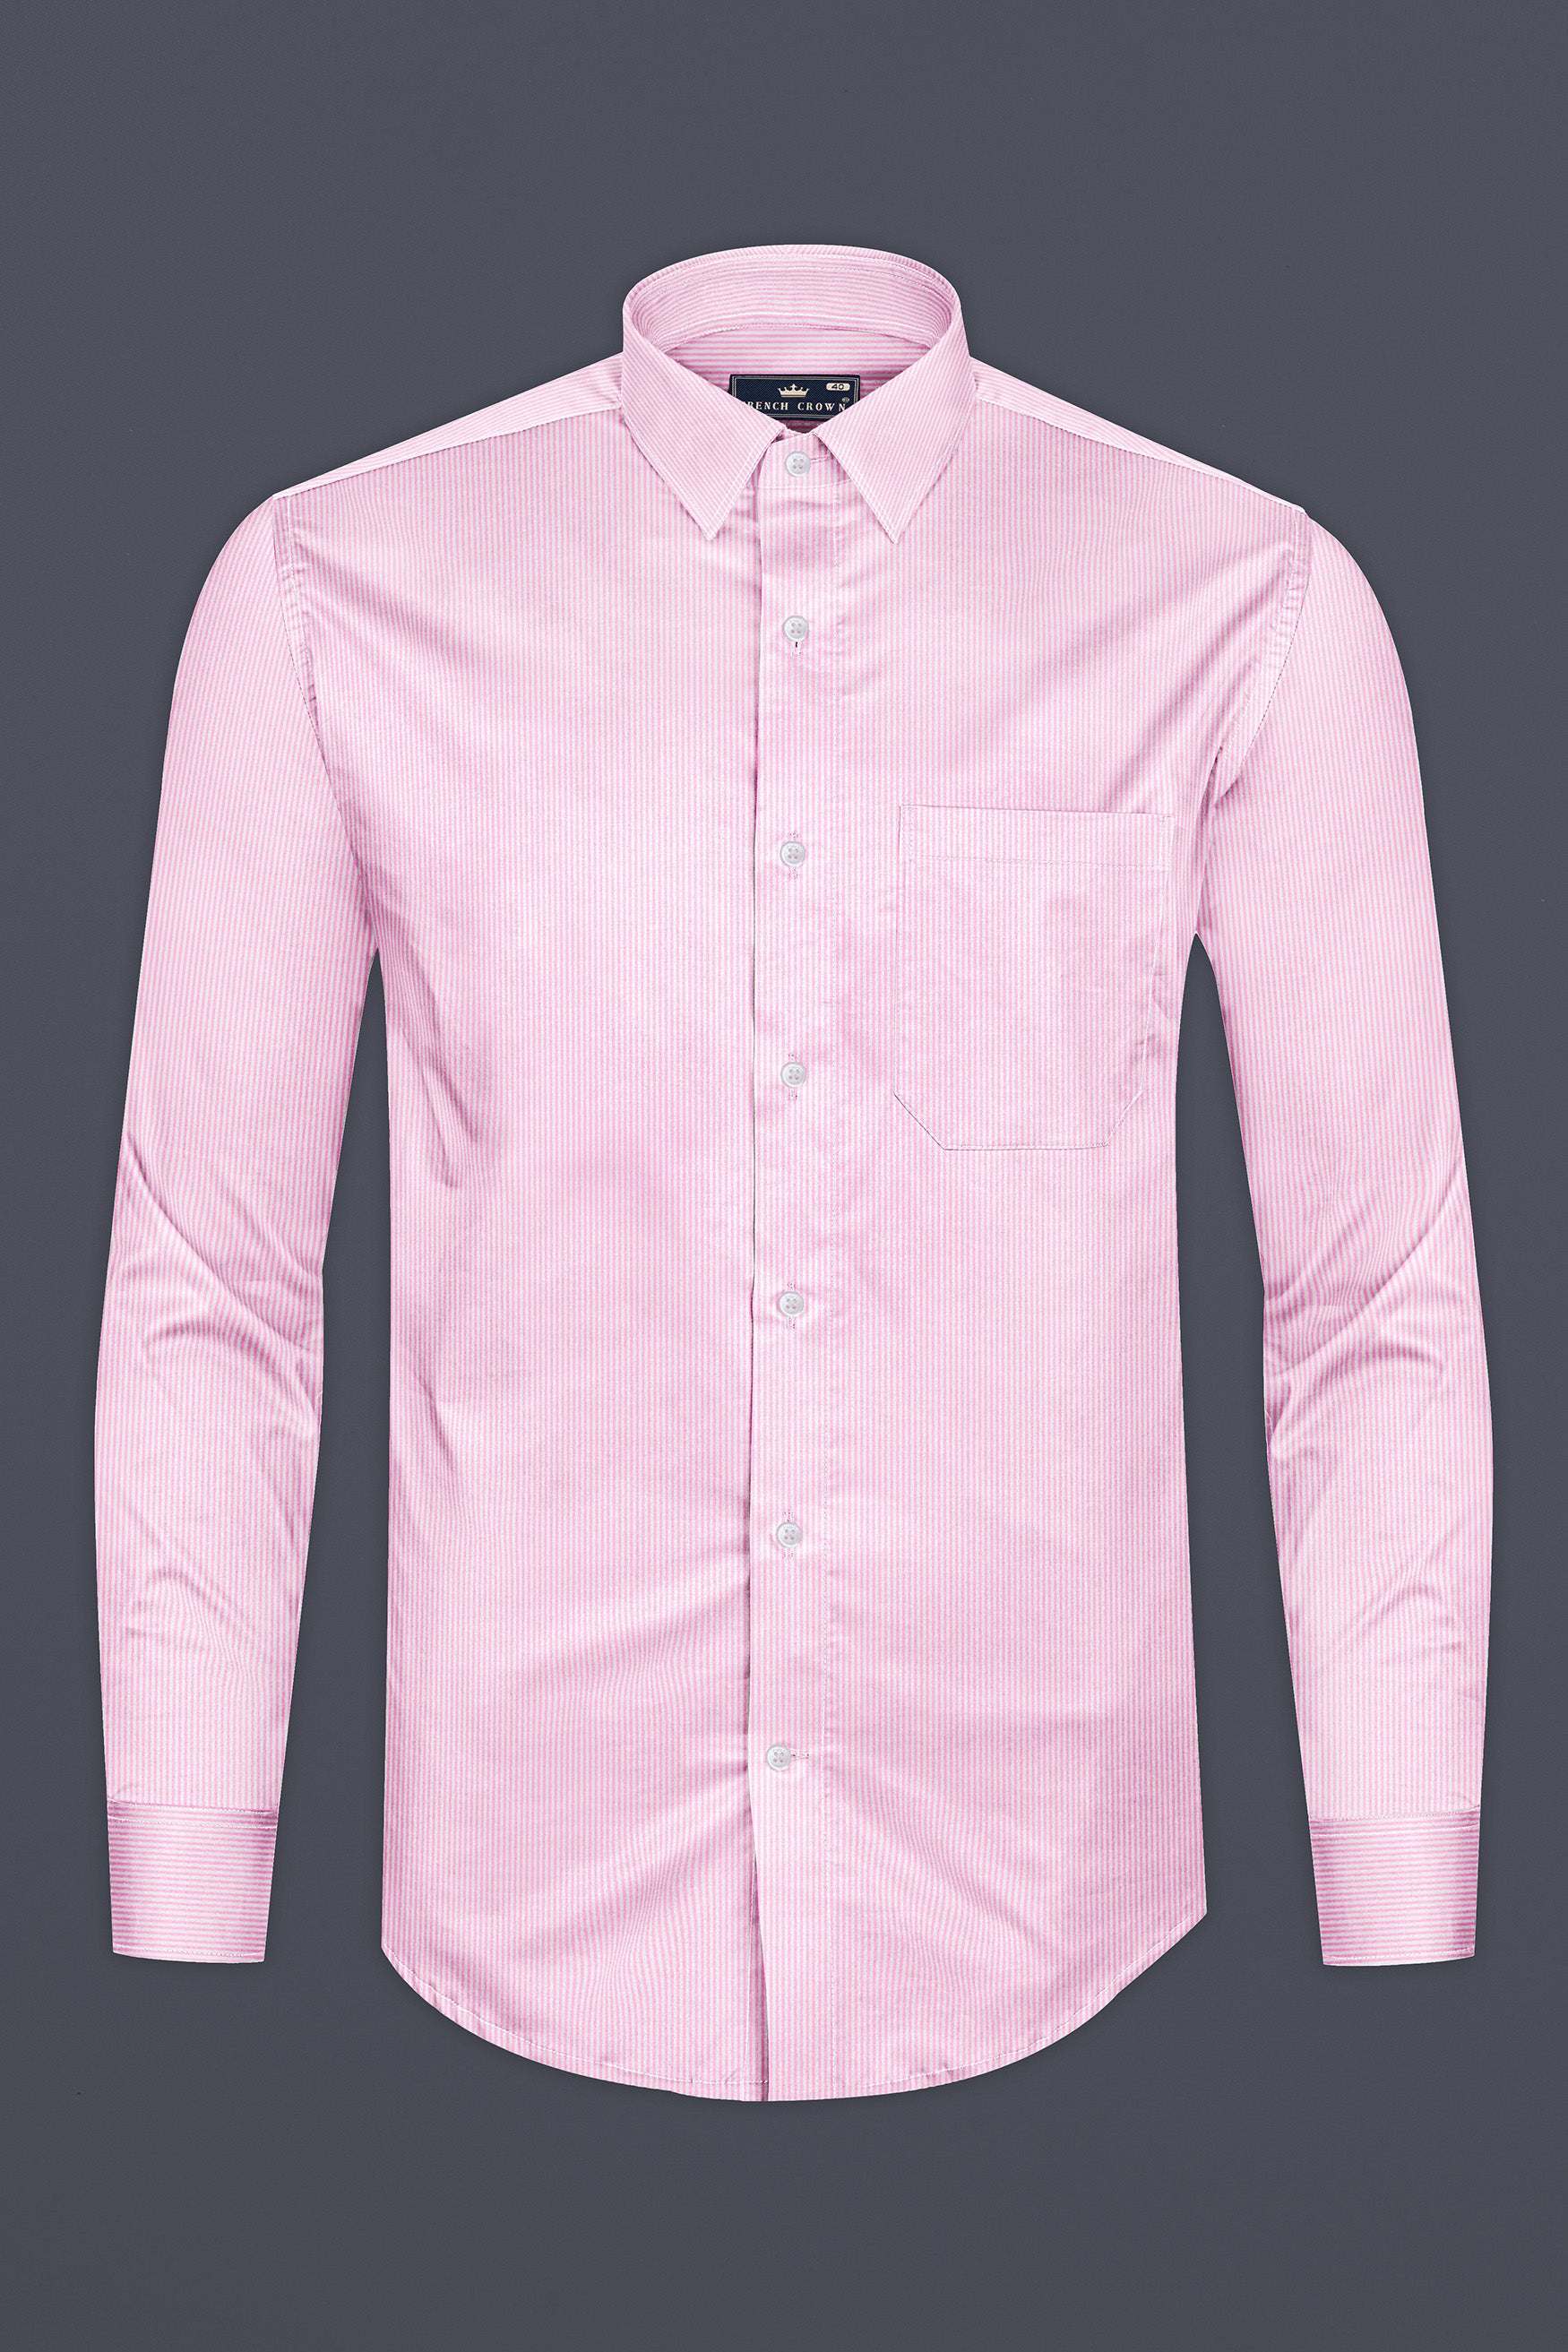 Pastel Pink and Bright White Striped Premium Cotton Shirt